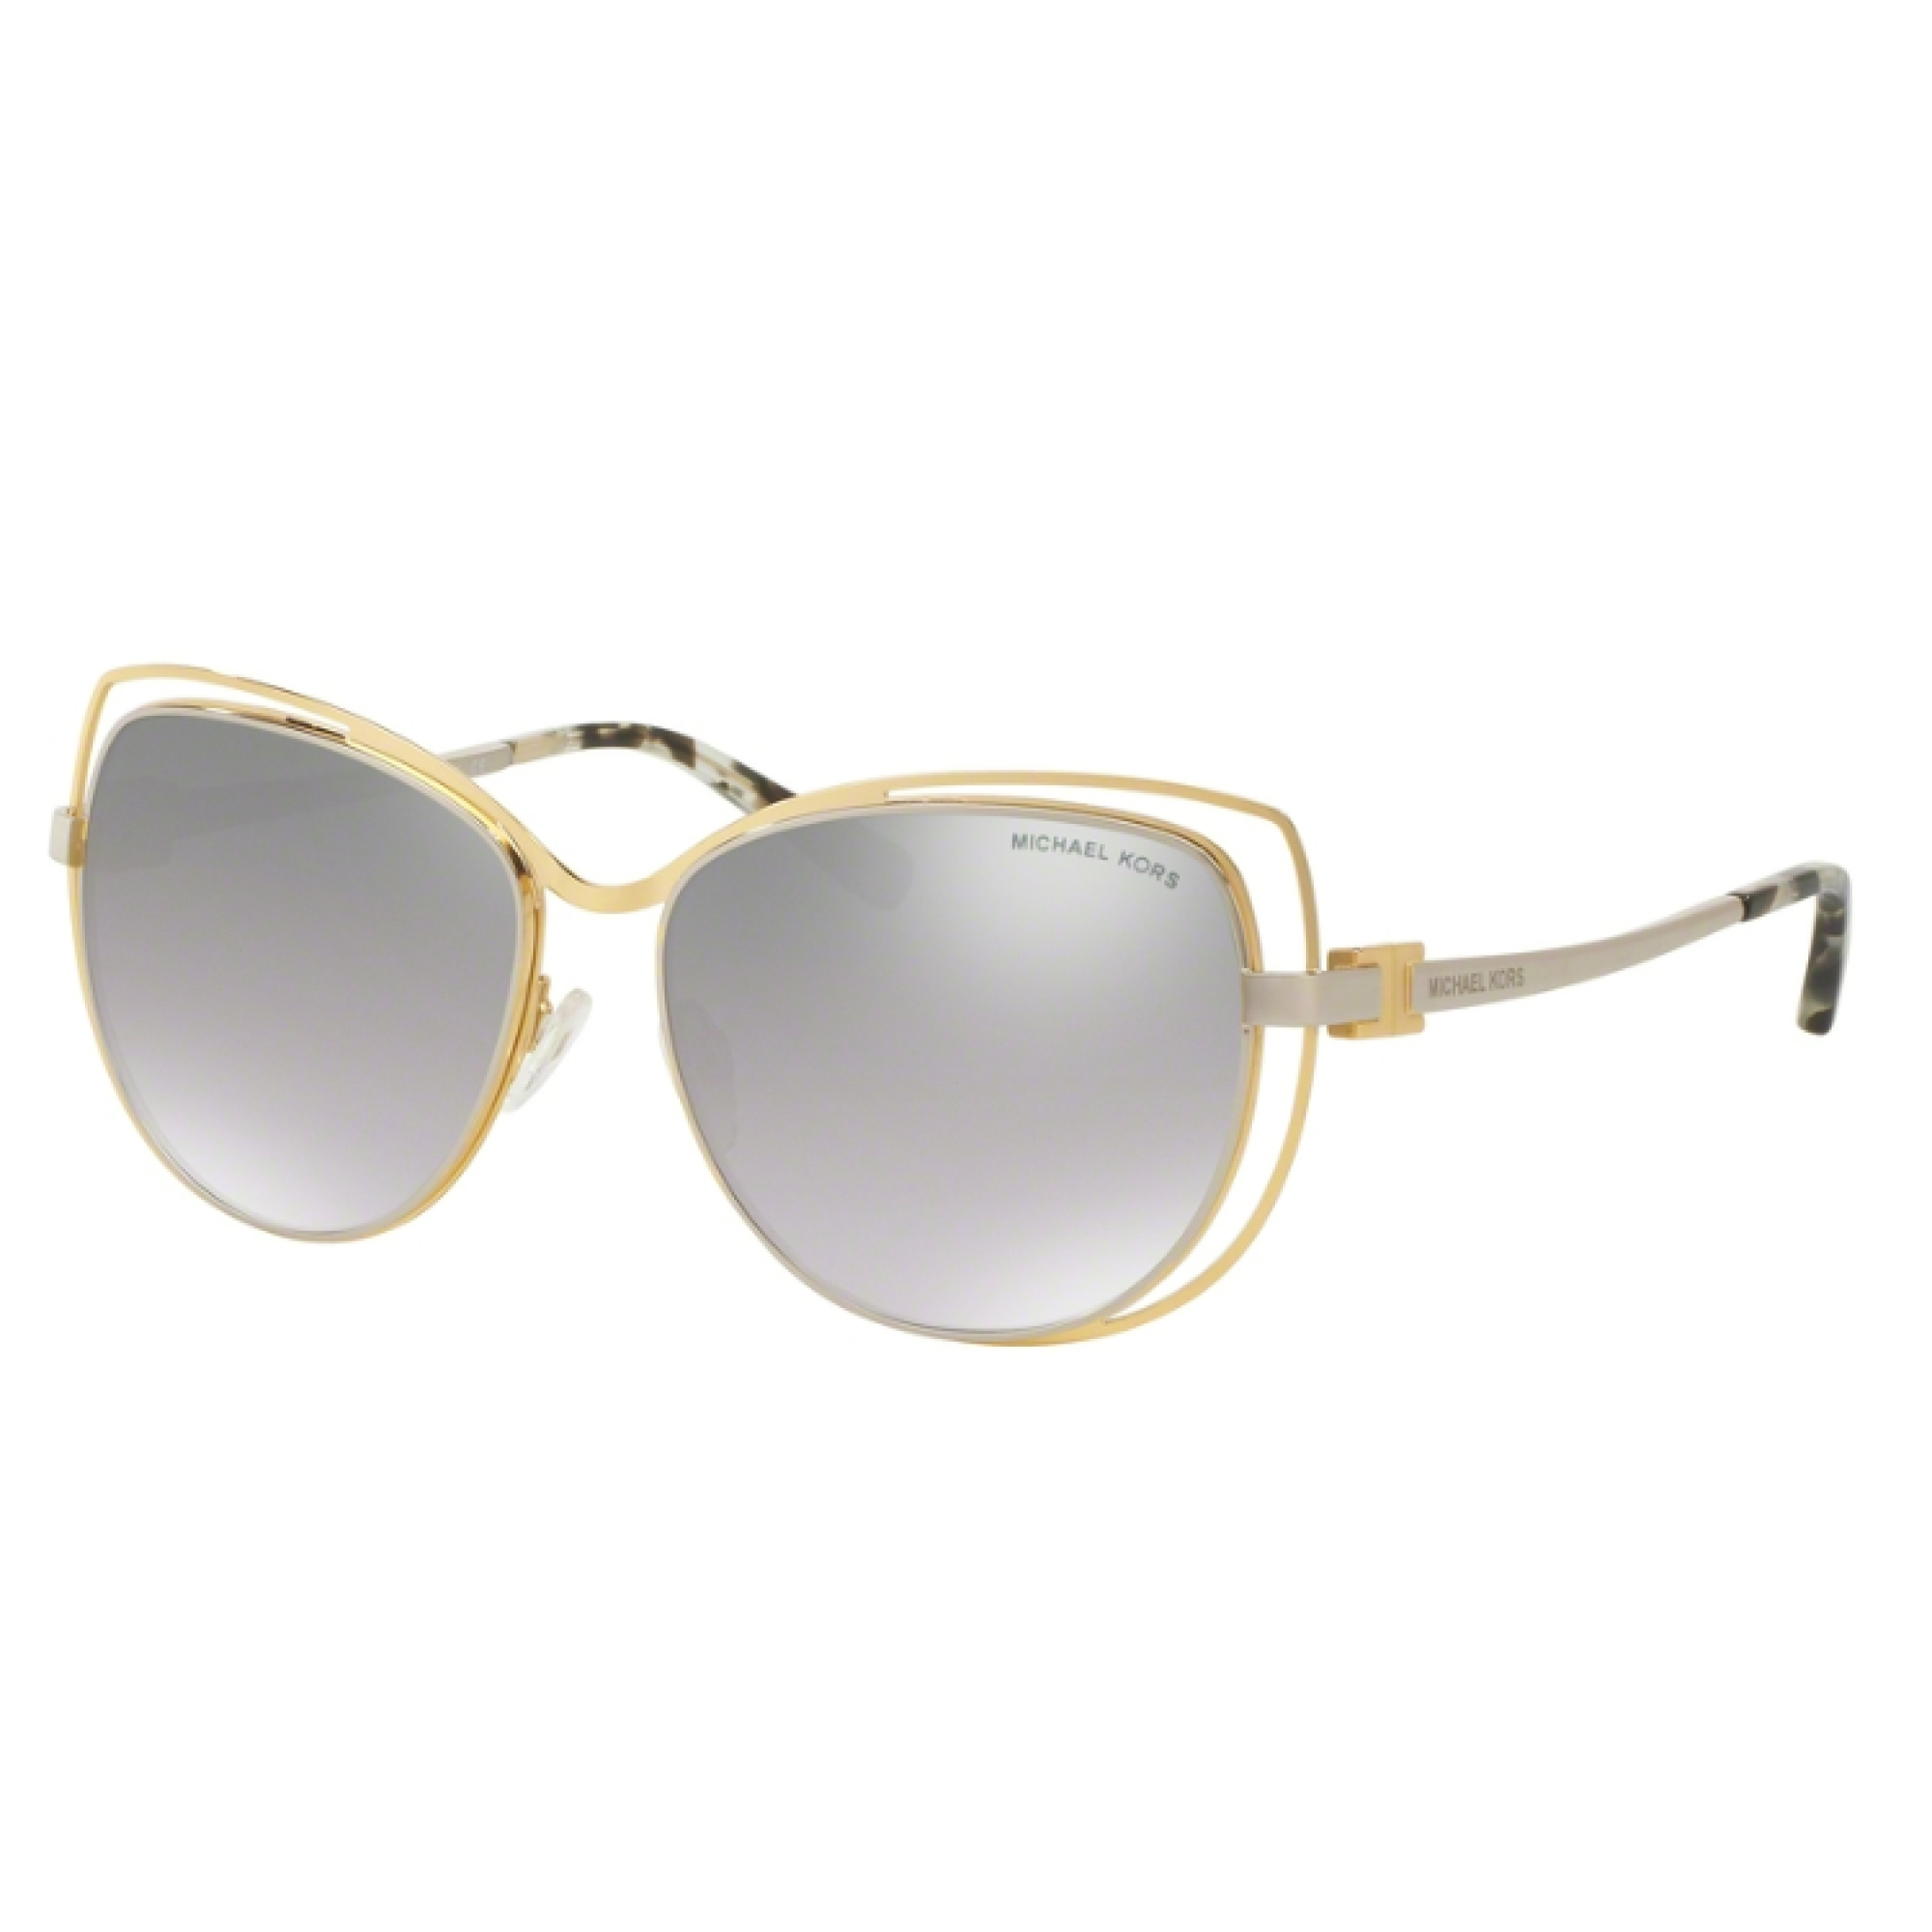 Michael Kors Mk 1013 Audrina I 11196v Gold Silver Sunglasses Woman